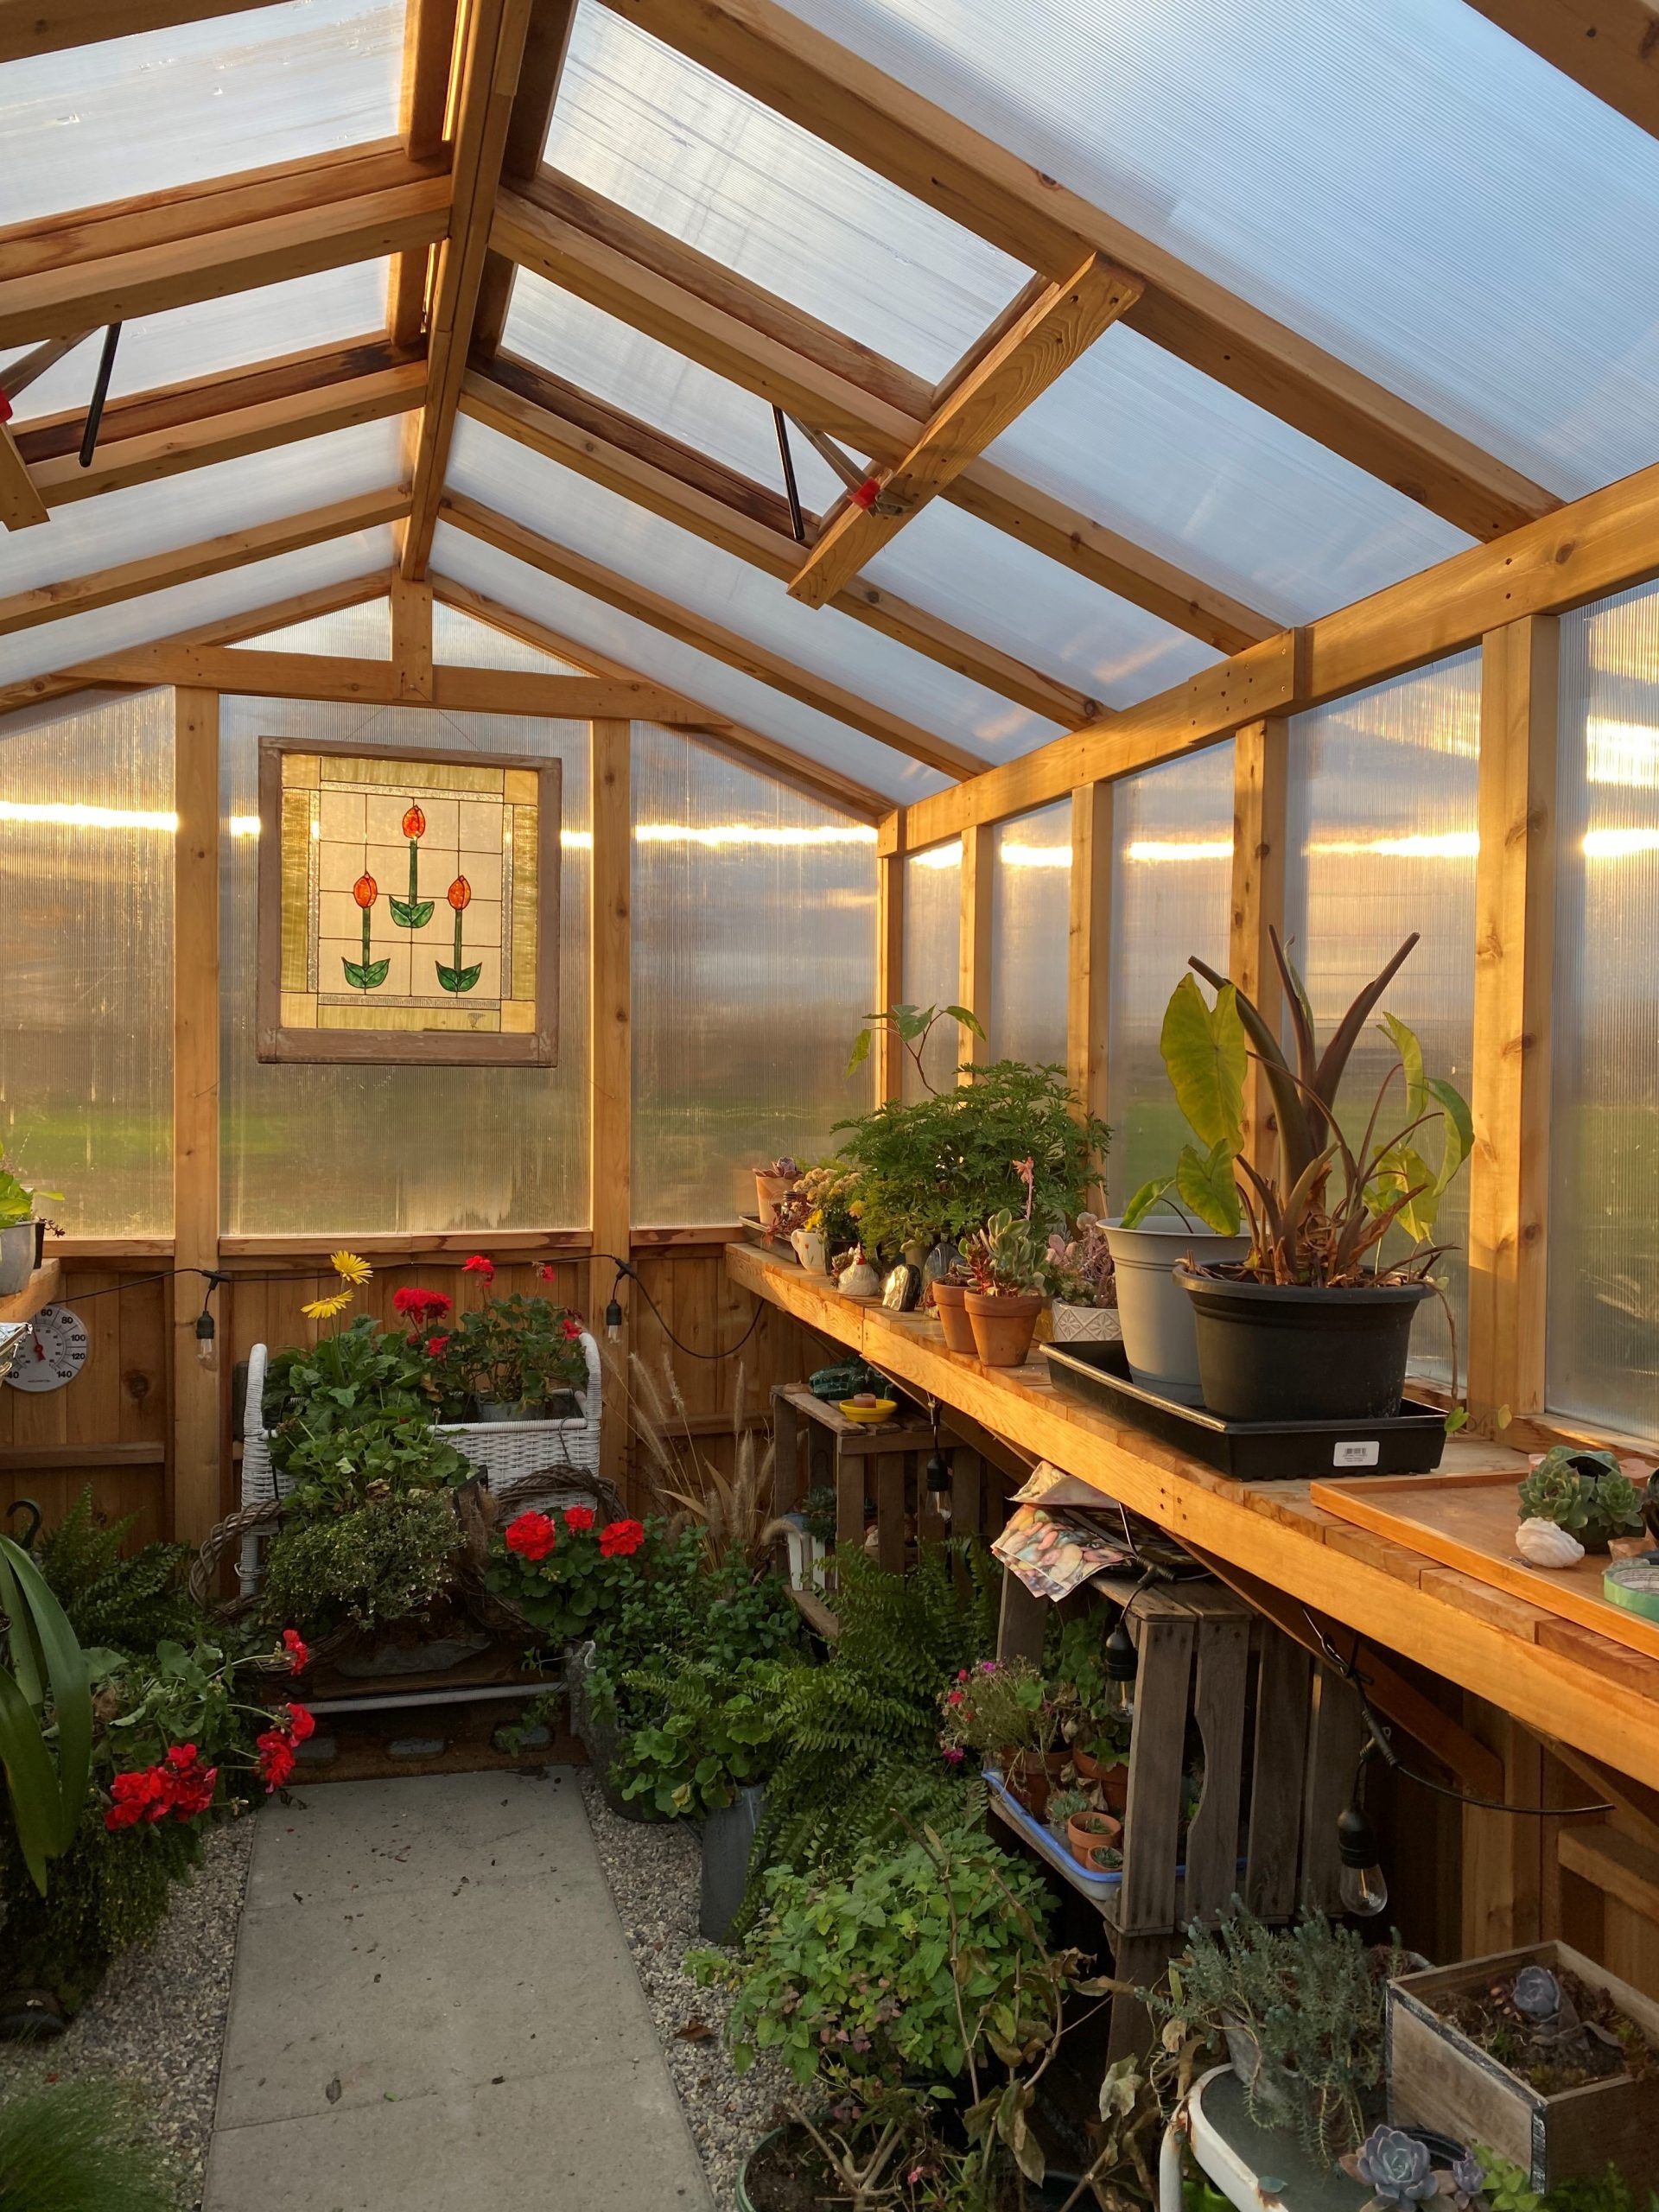 8x12 Greenhouse